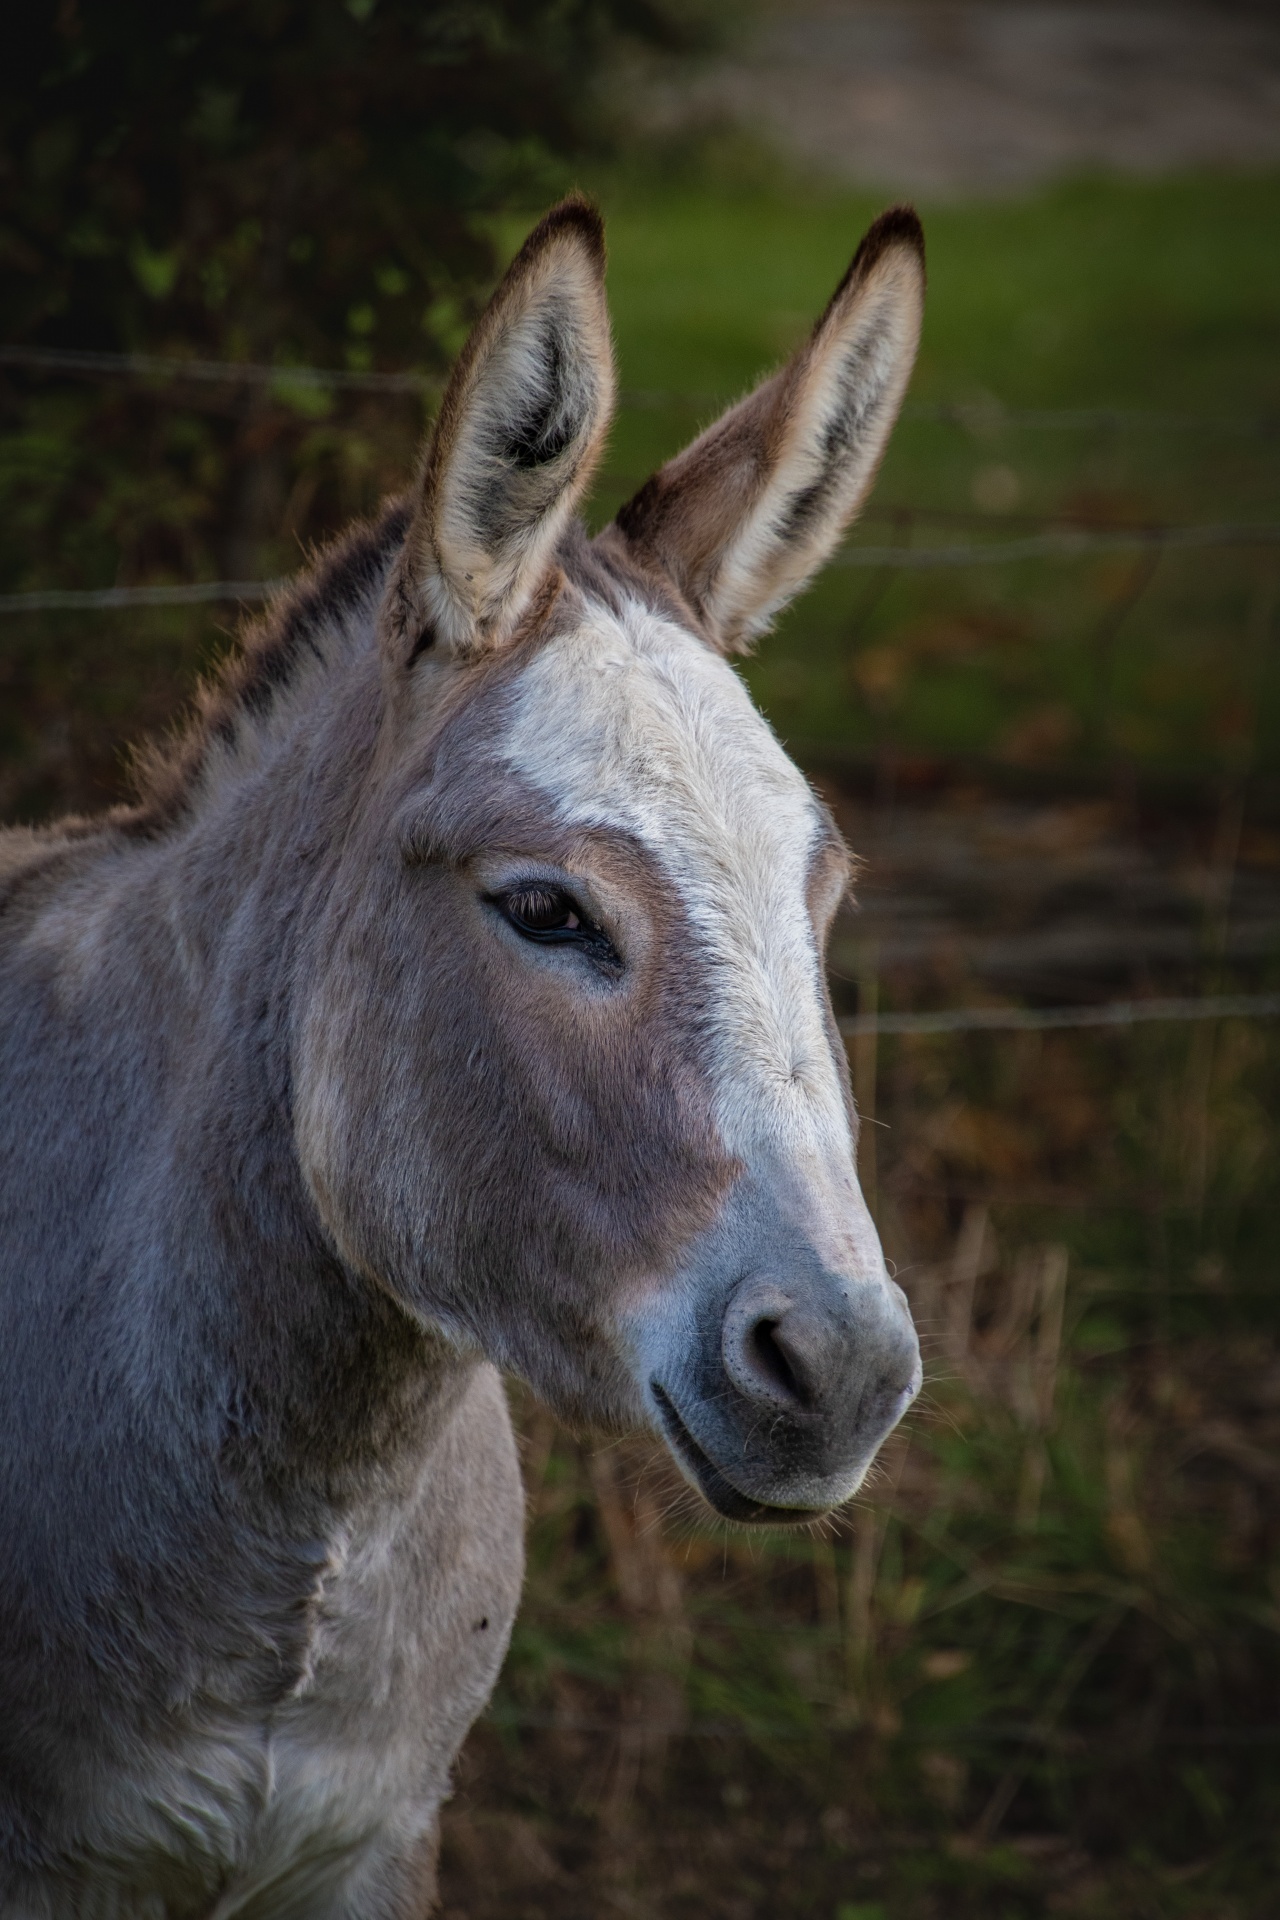 Animal portrait of a donkey